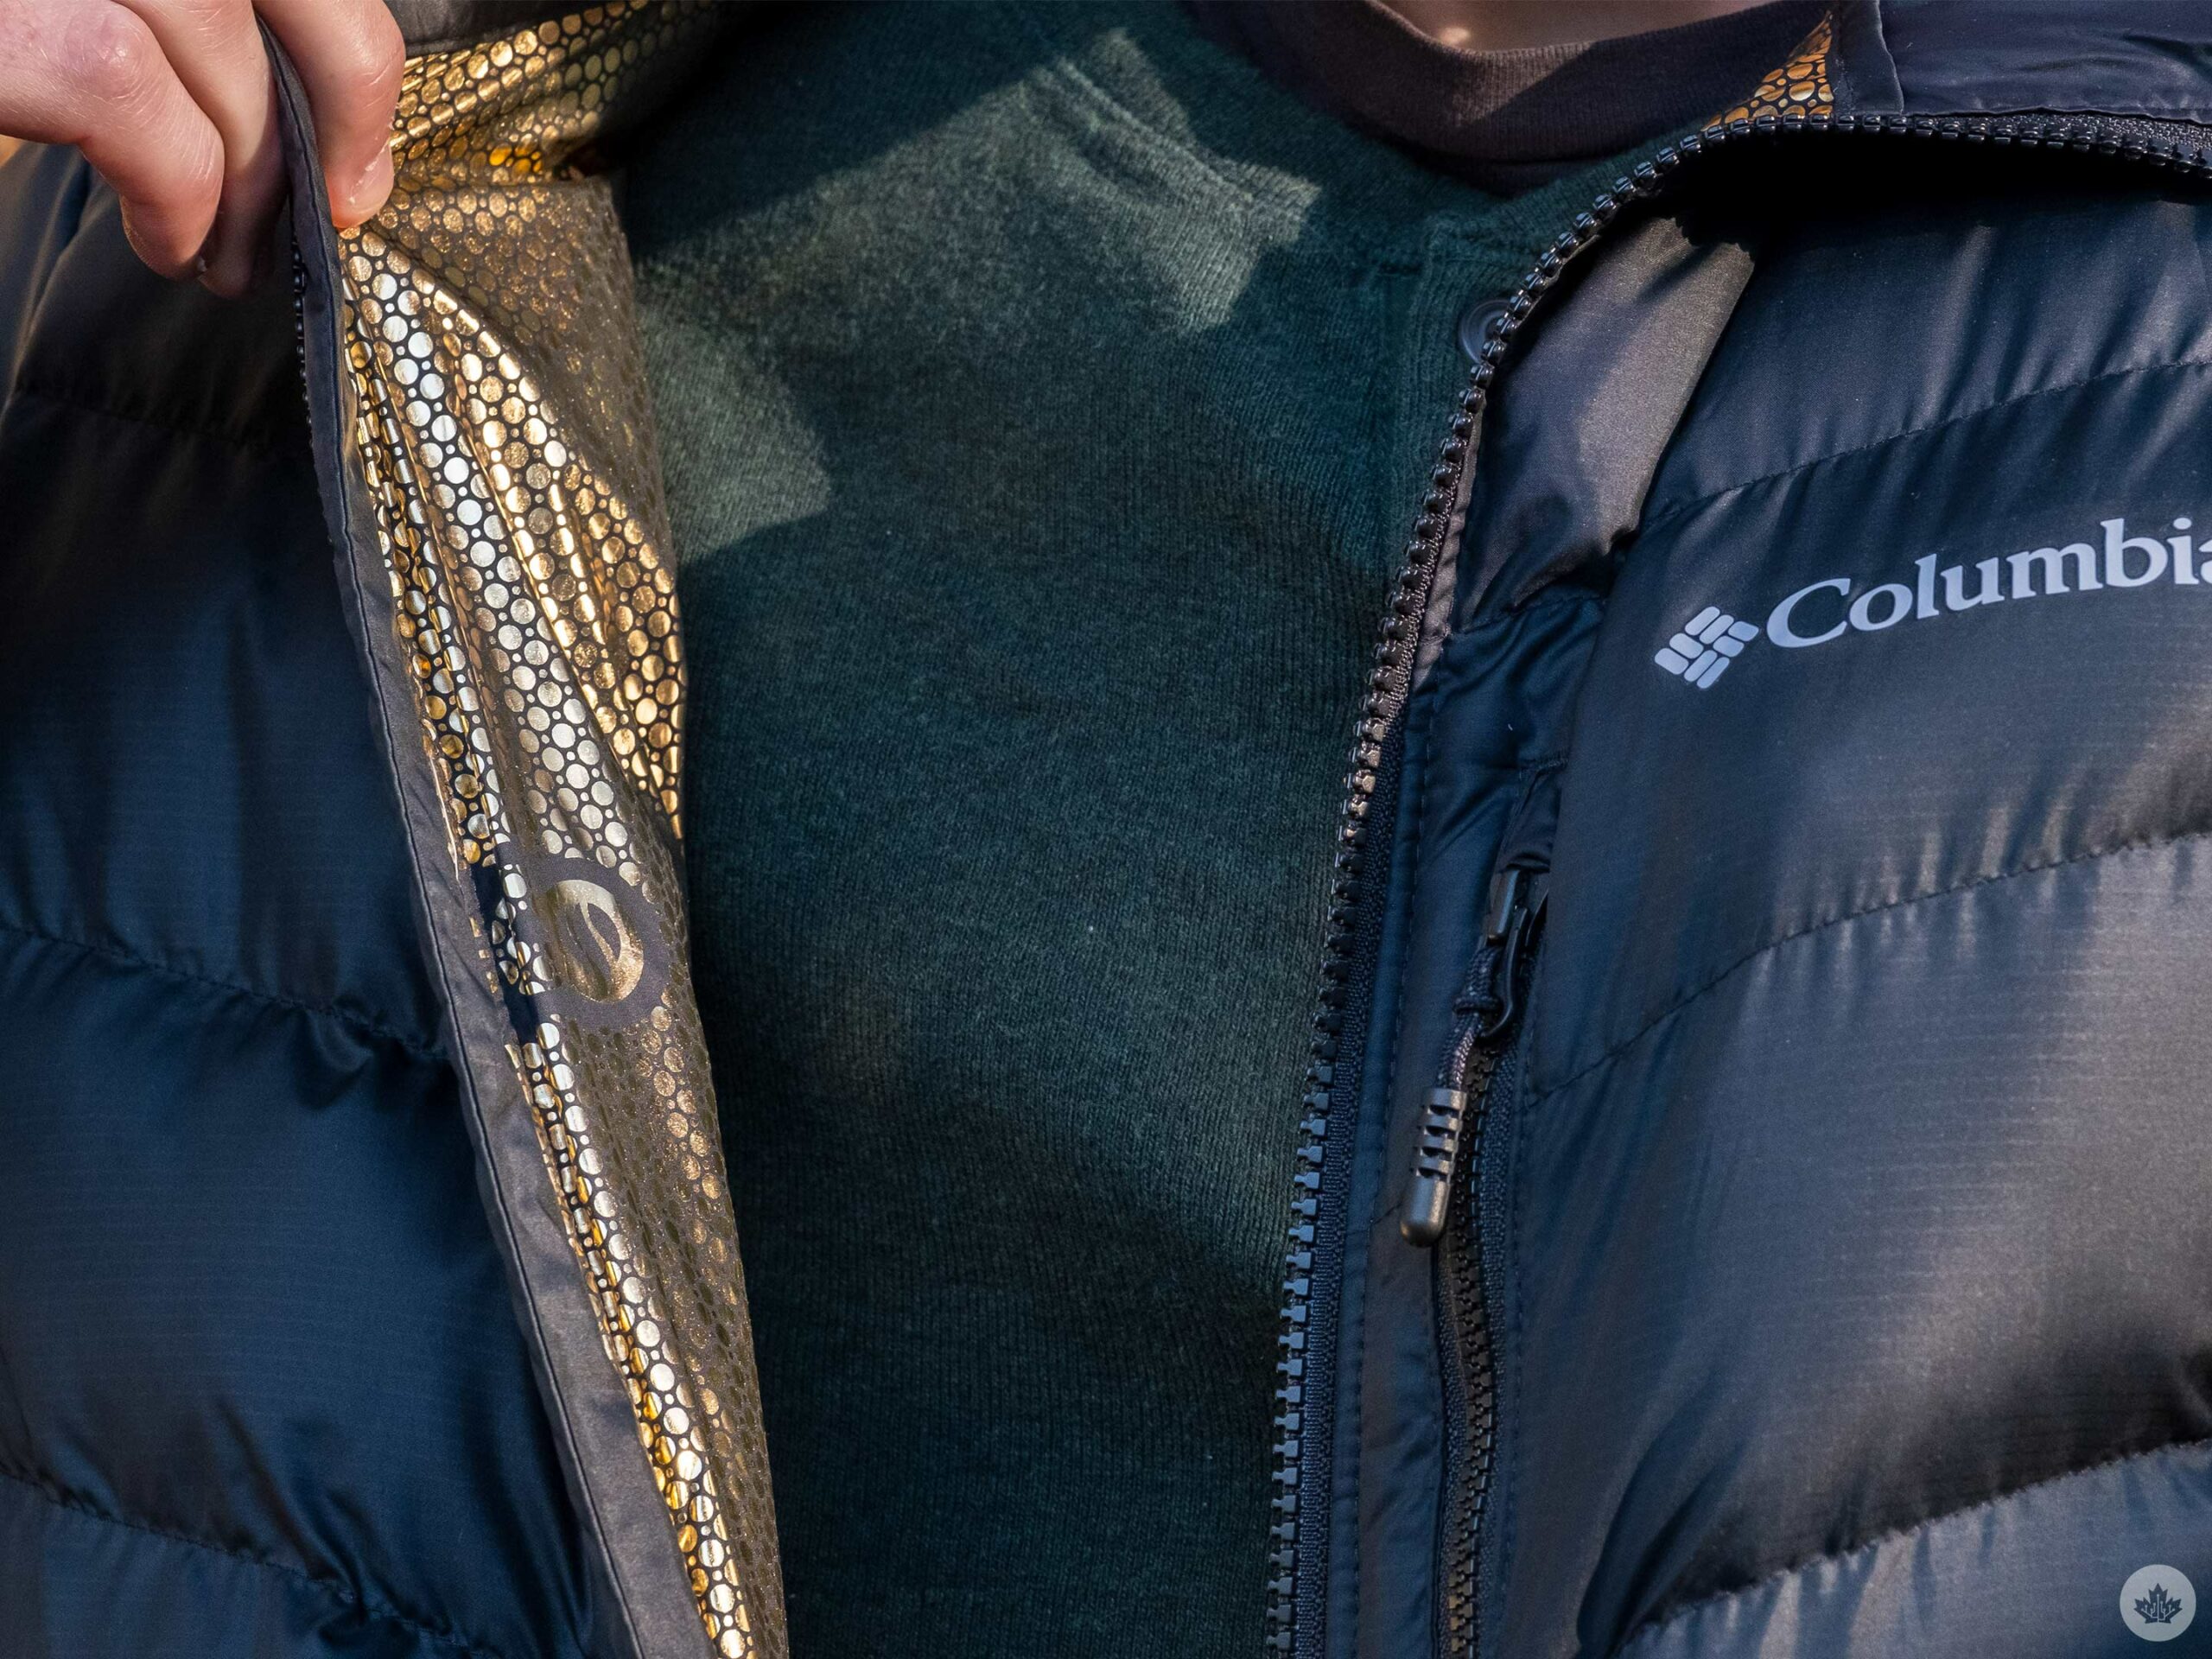 Columbia's new Omni-Heat jacket keeps you warm and looks cool